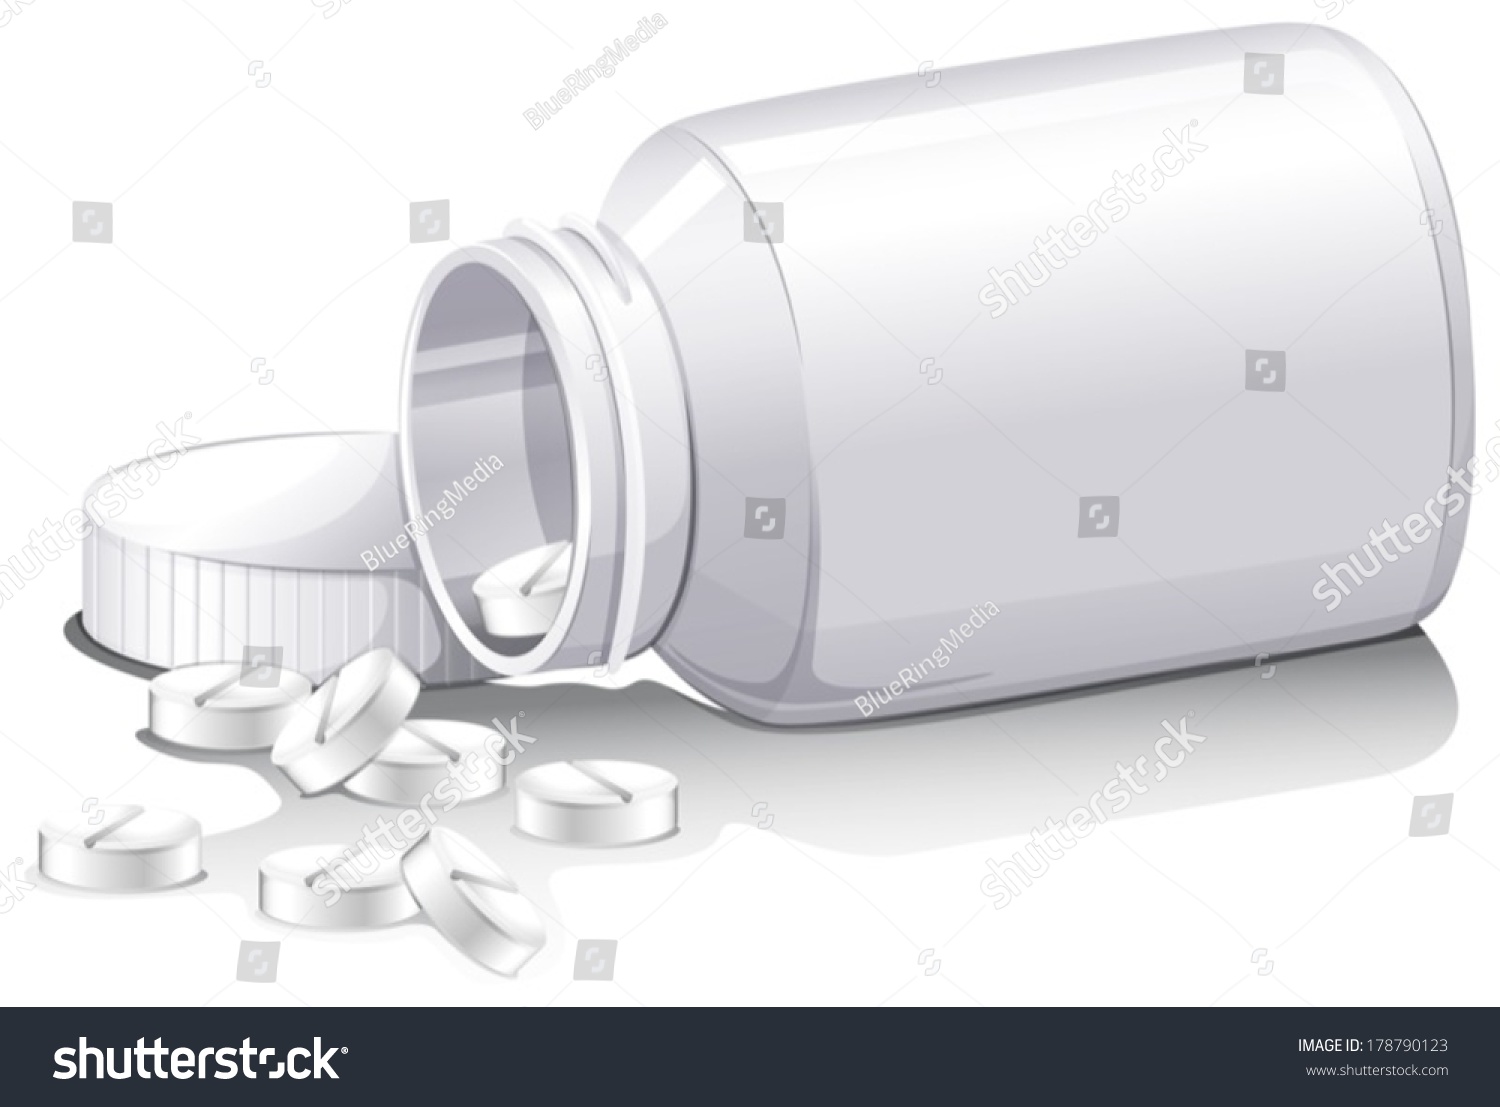 SVG of Illustration of the medicinal tablets on a white background svg